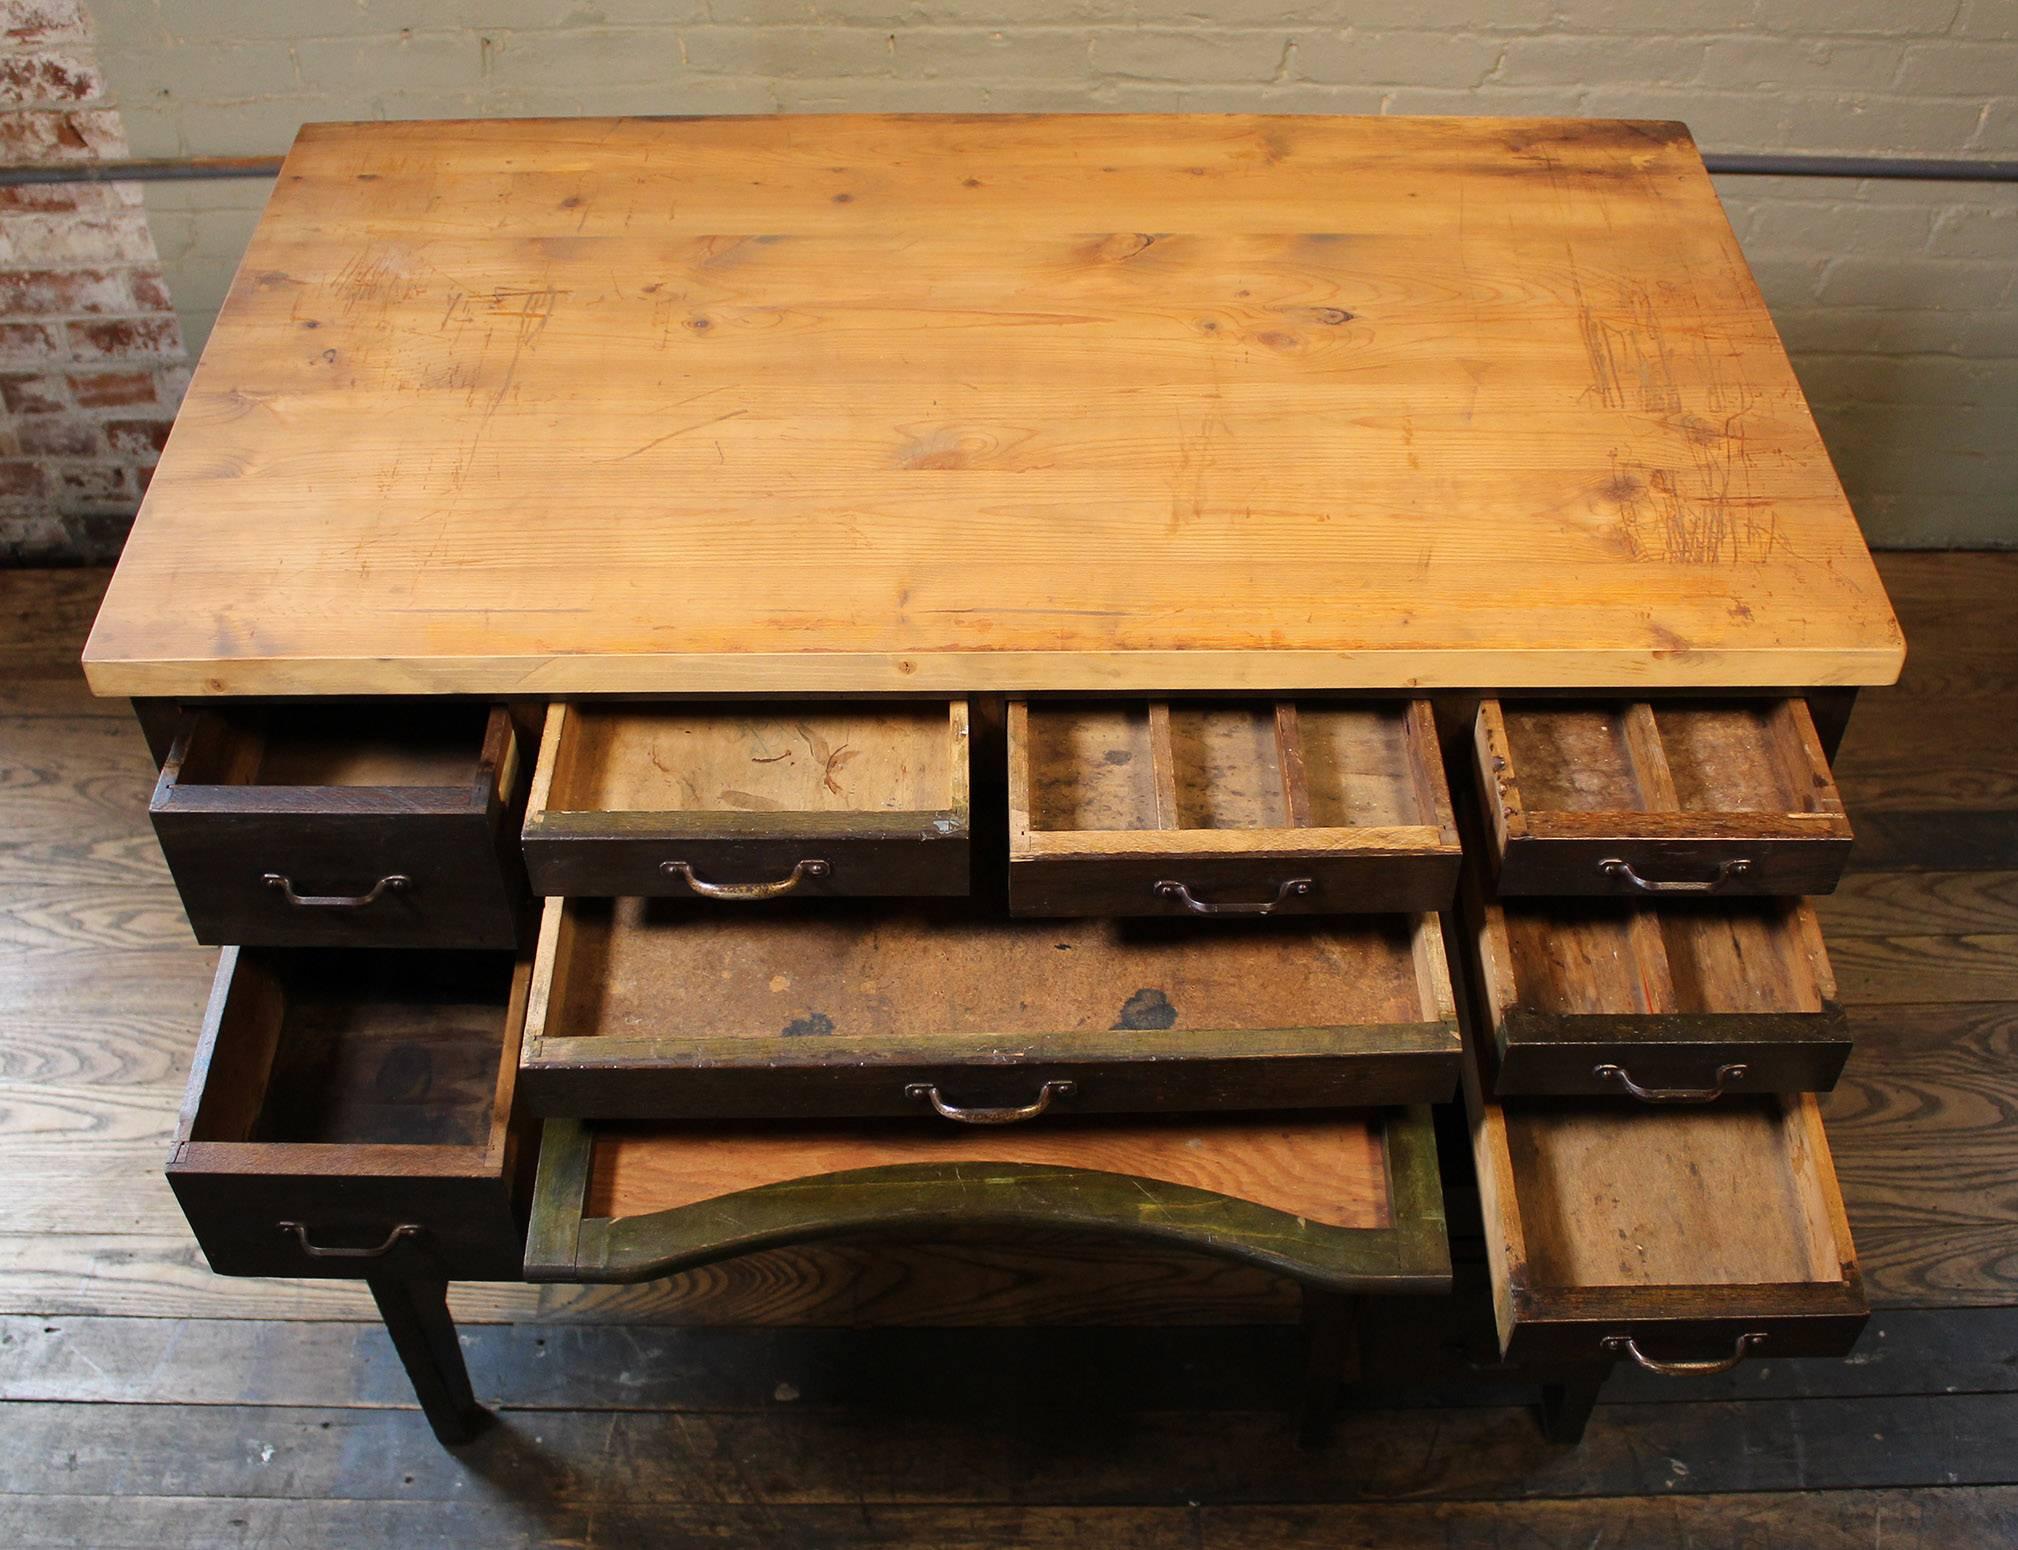 American Jewelers Workbench, Desk, Cabinet, Wooden Vintage Industrial Storage